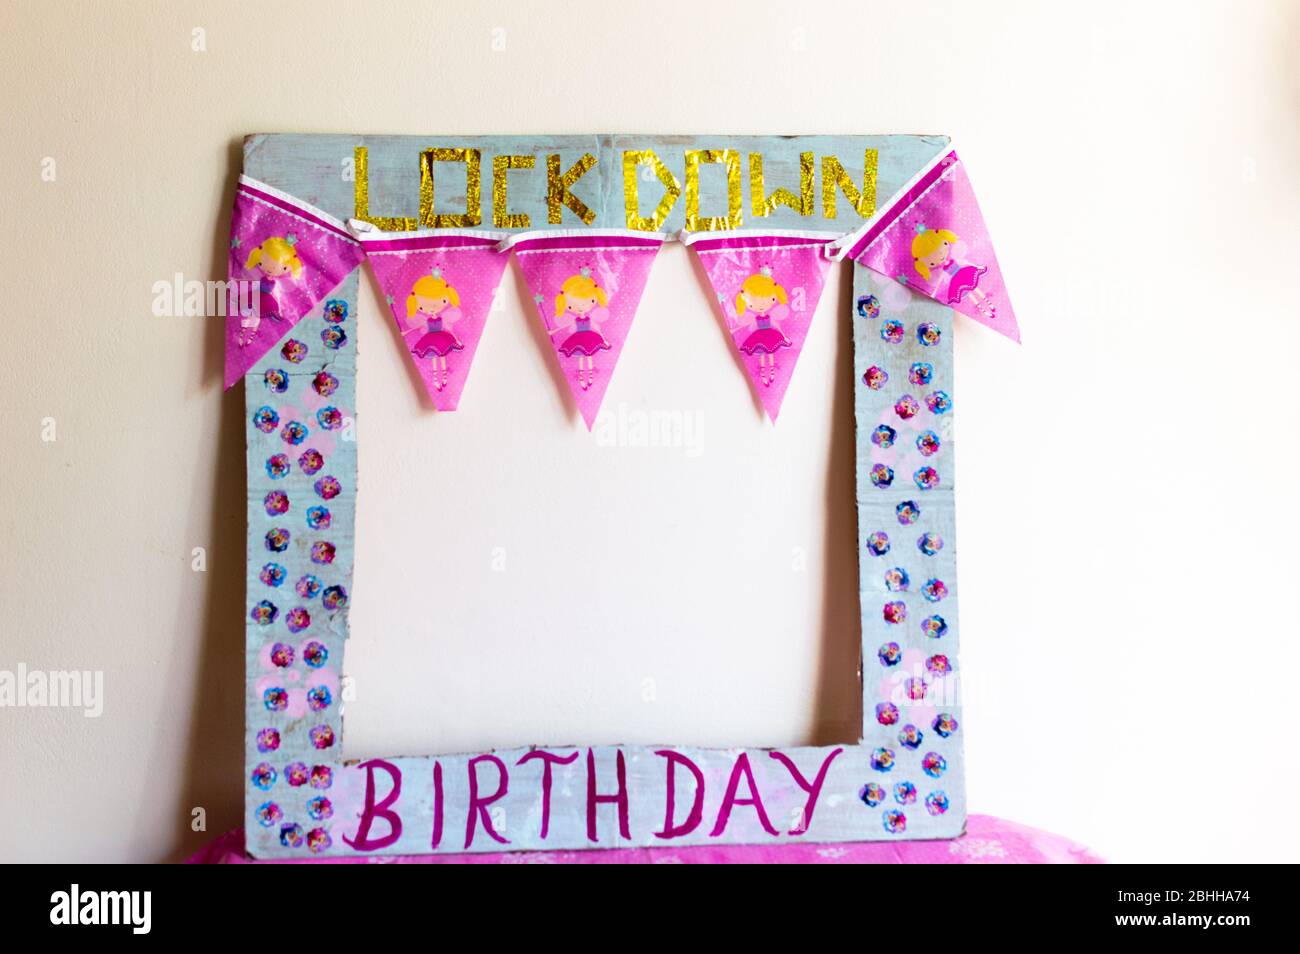 Lock down birthday celebration Stock Photo